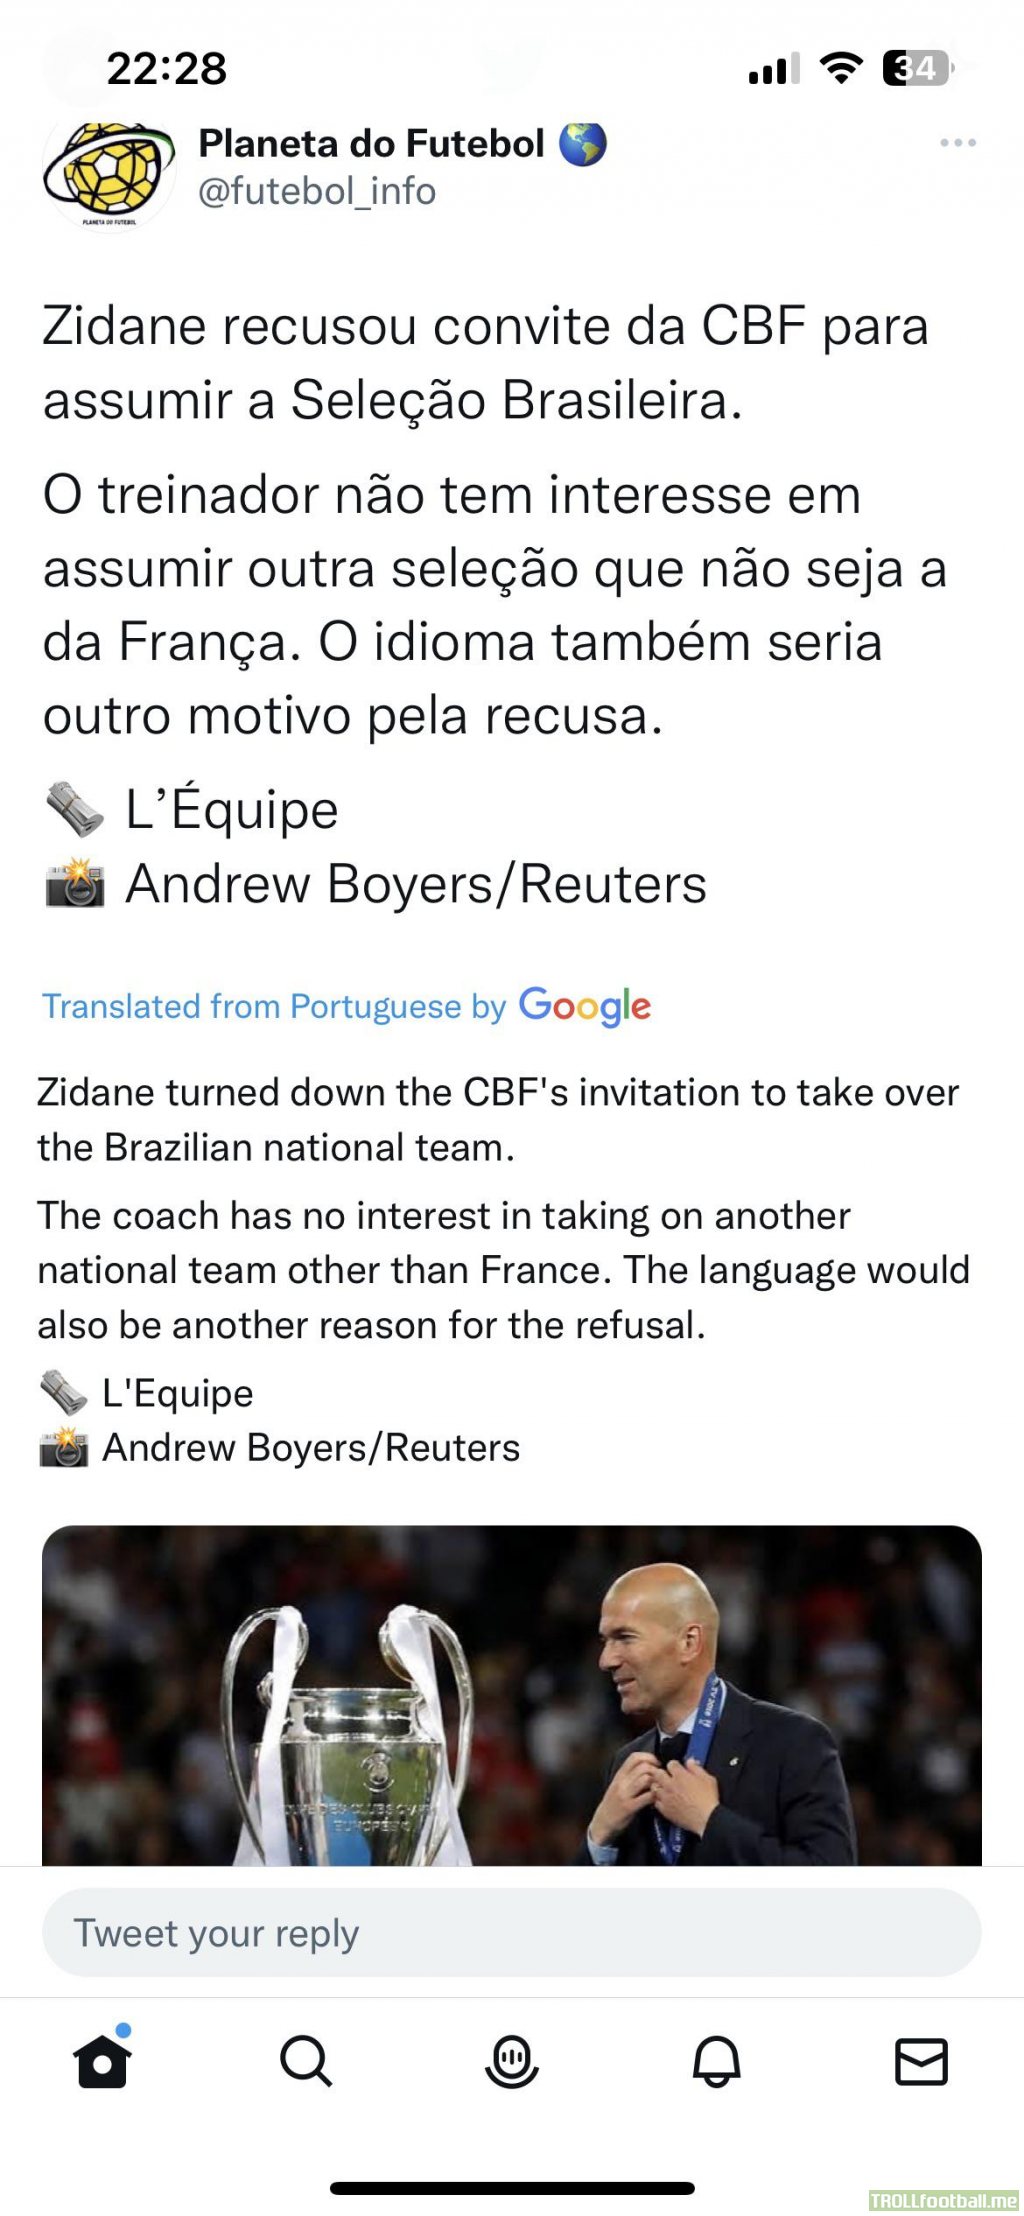 Zidane turned down the CBF's invitation to take over the Brazilian national team.